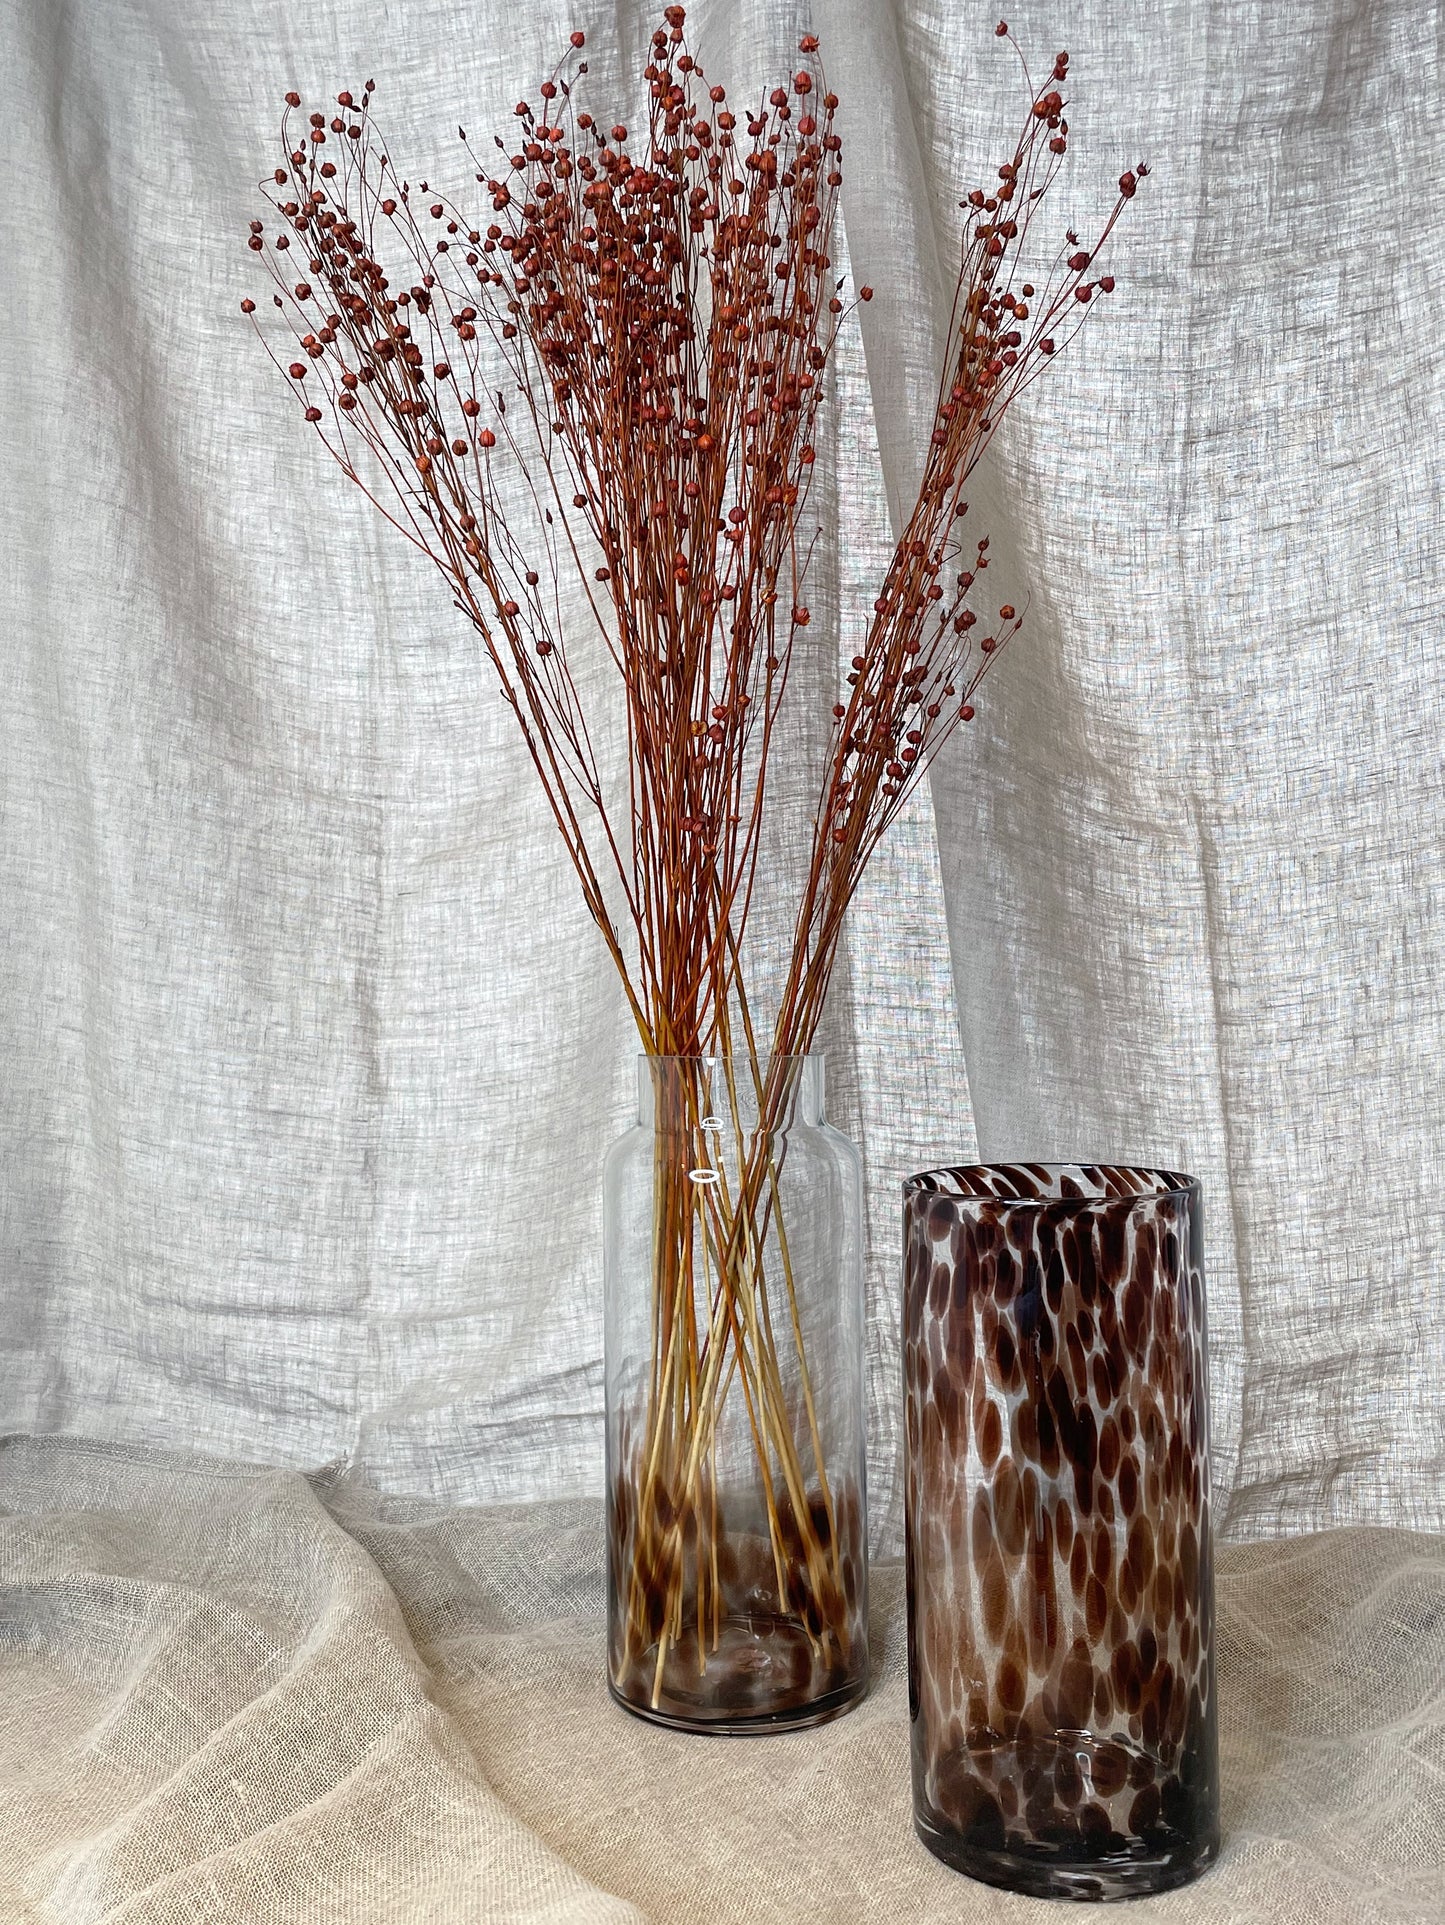 half leopard vase